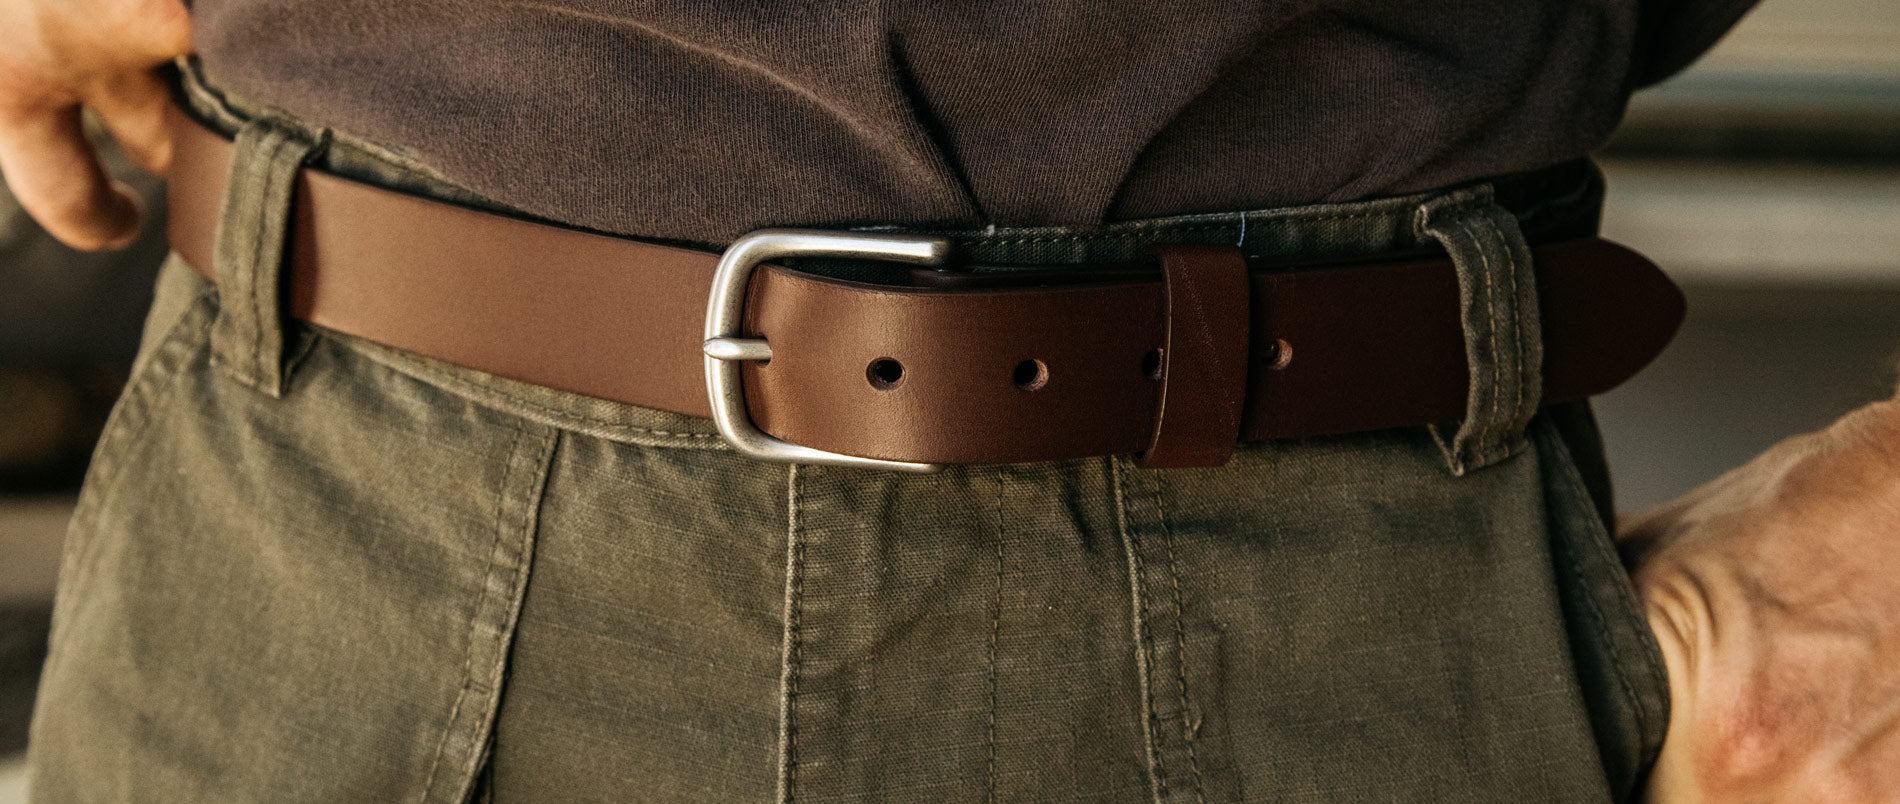 A cognac classic belt around a man's pants.